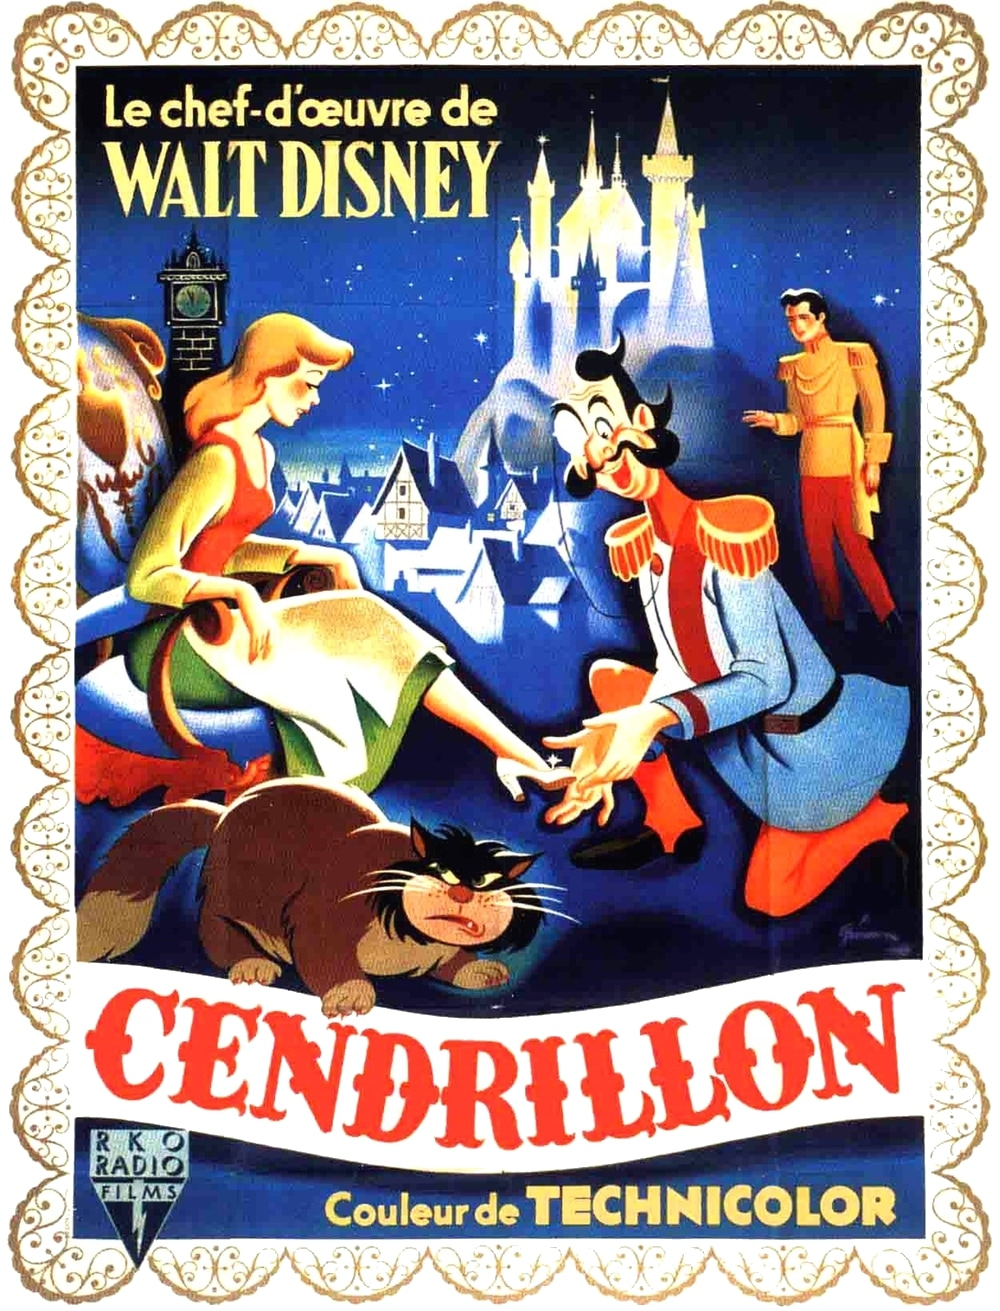 Cinderella / French Cast - Charguigou concernant Cendrillon 3 Disney